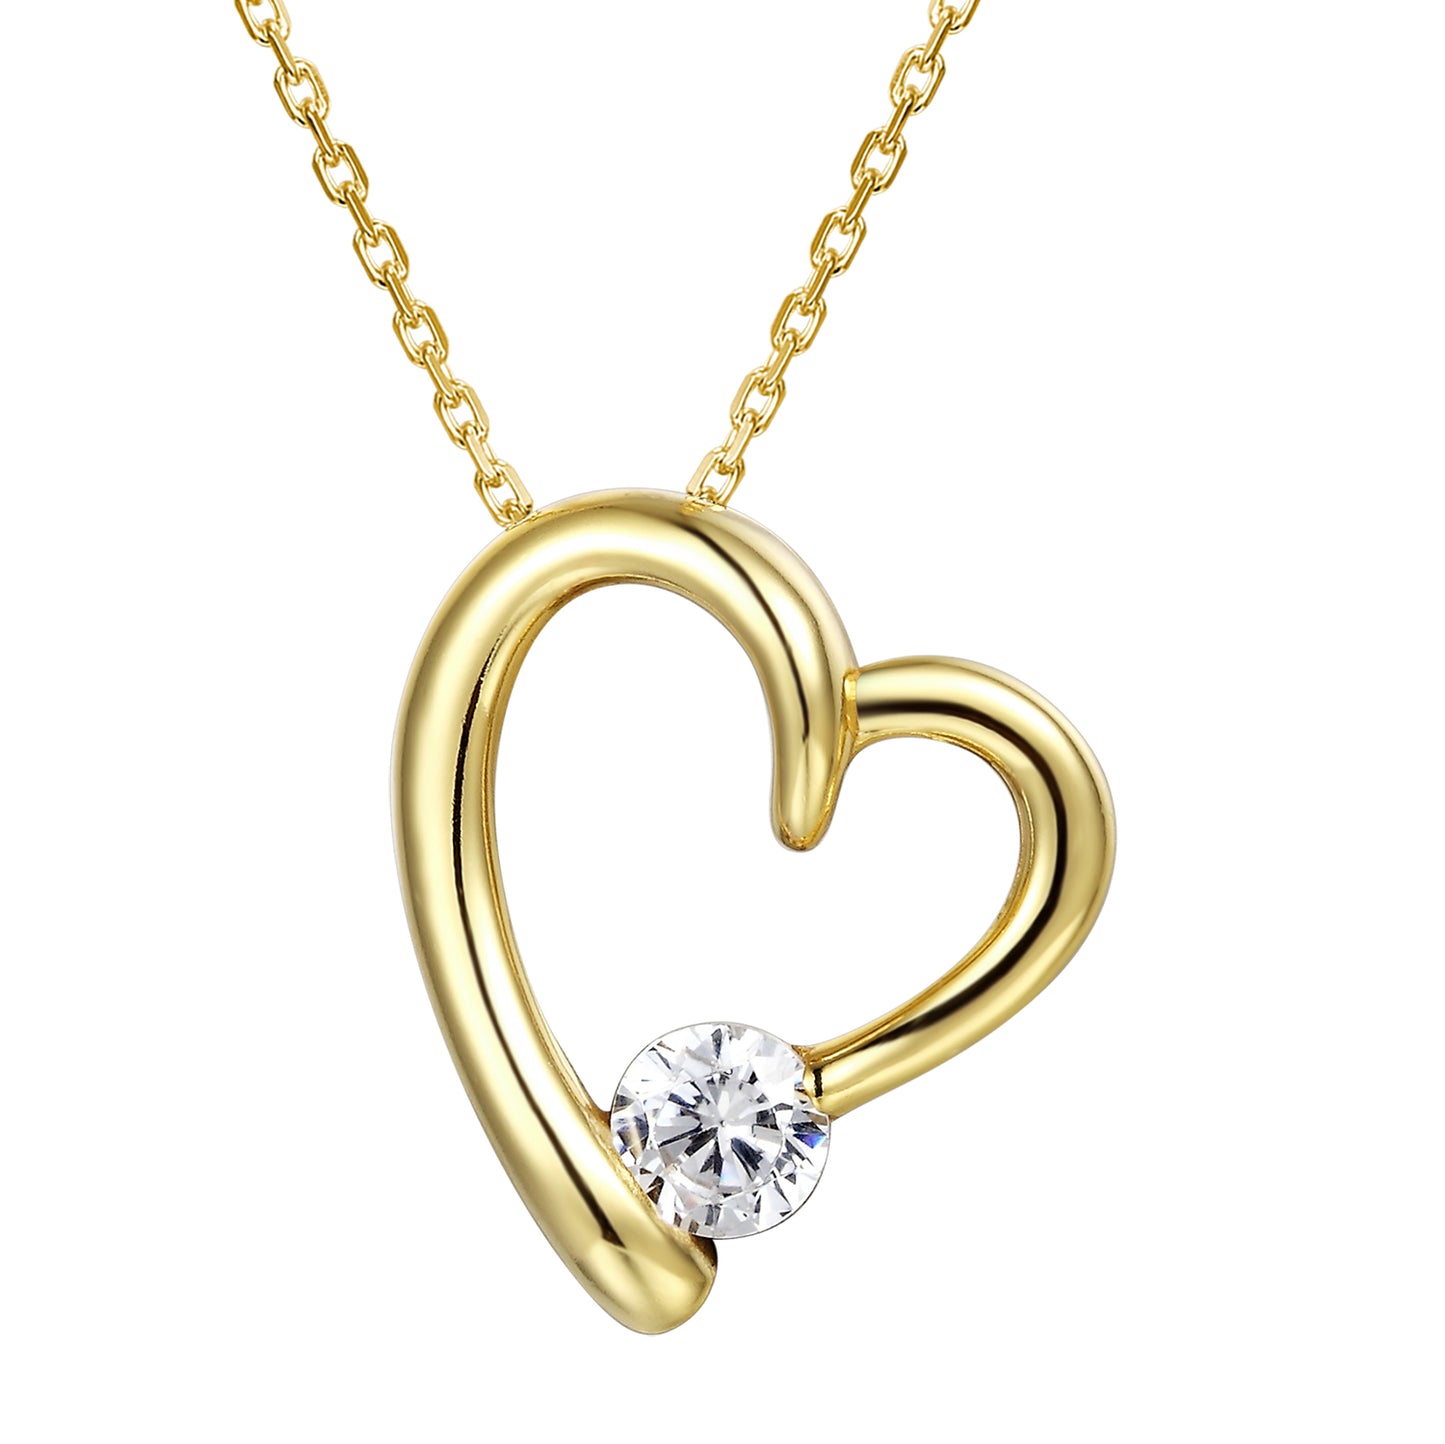 Tilted Open Heart Love 14k Gold Finish Pendant Chain Valentine's